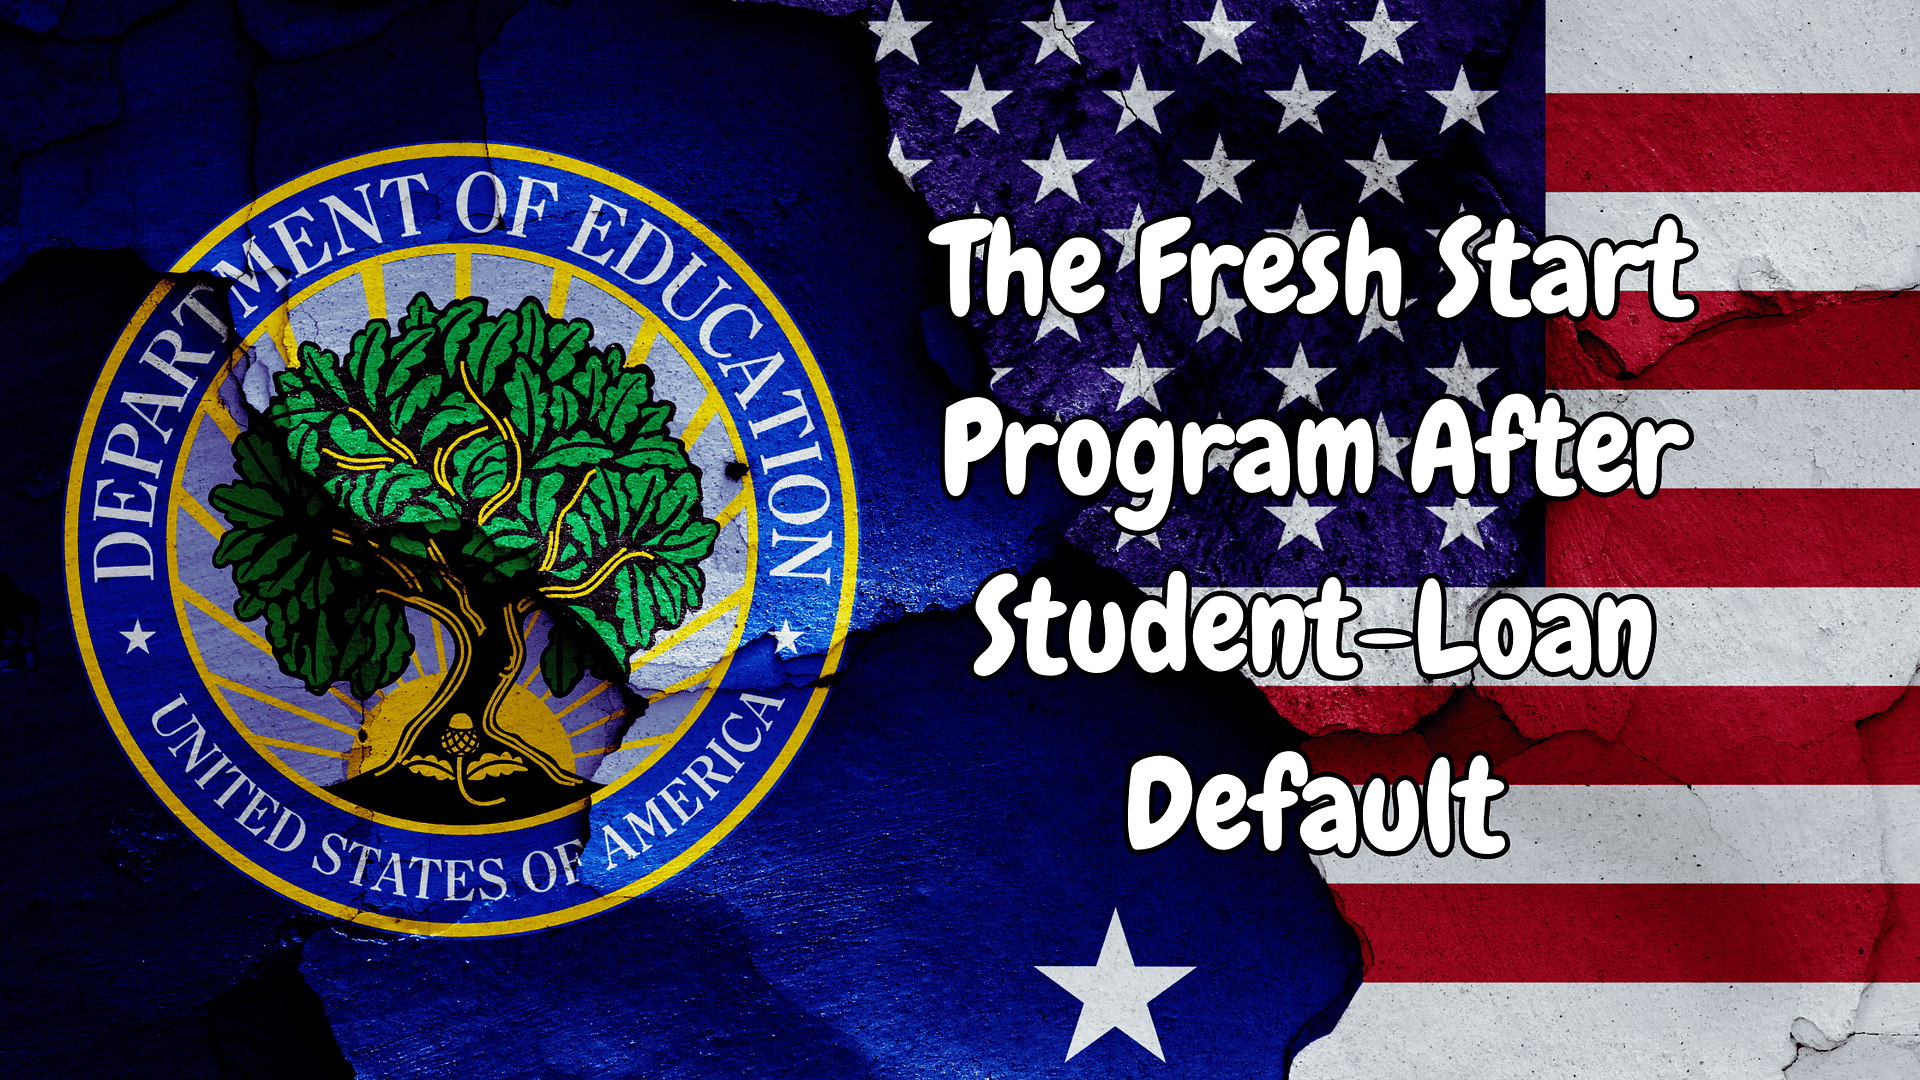 The Fresh Start Program After Student-Loan Default